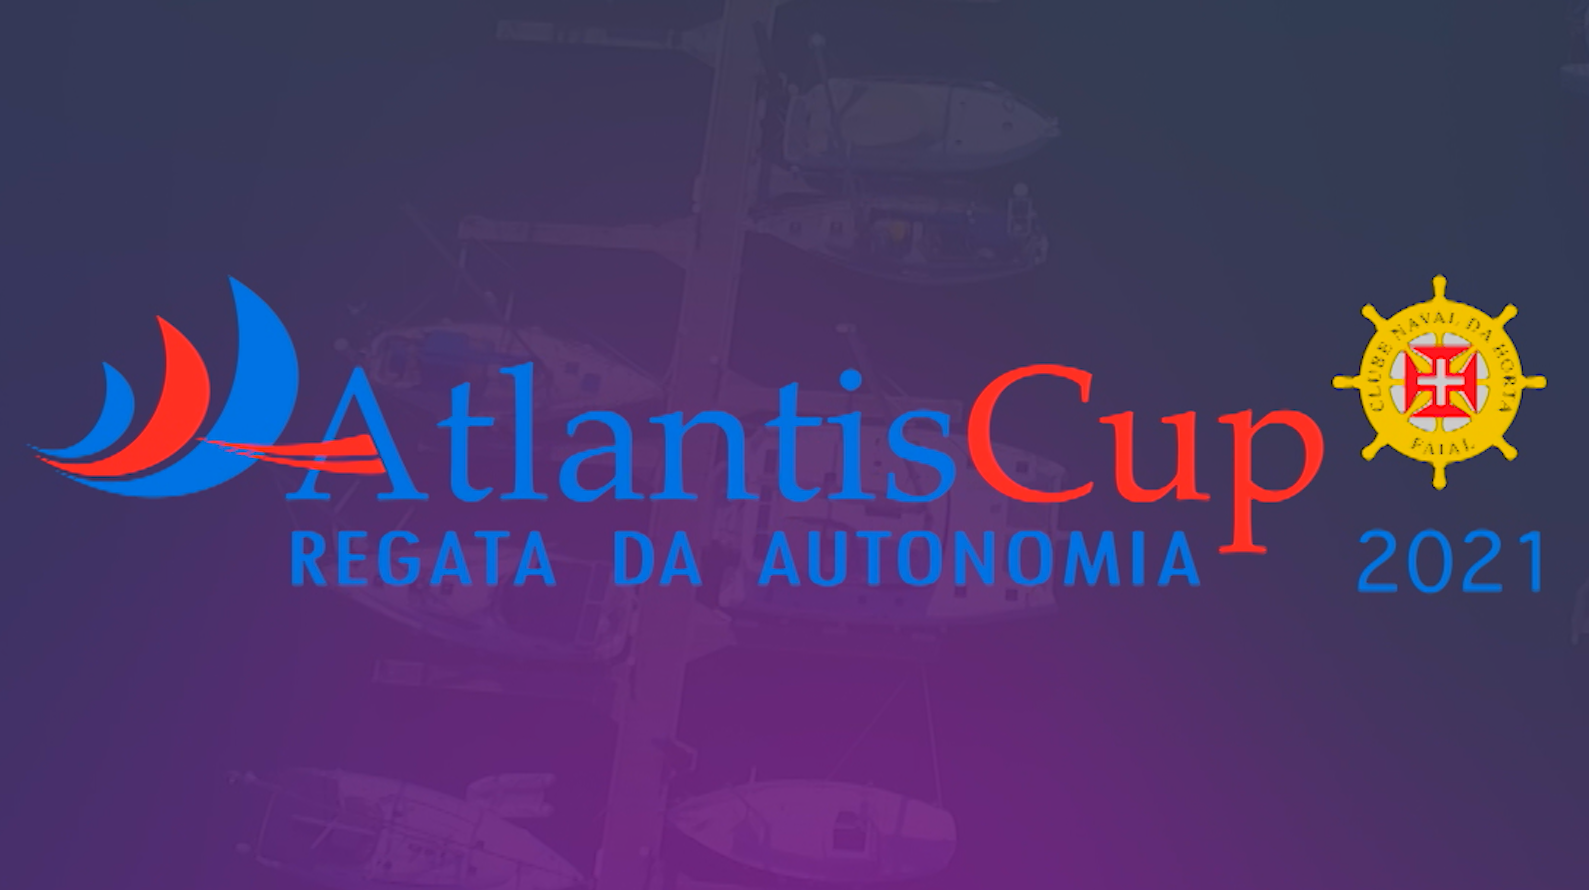 32 Atlantis CUP - Regata da Autonomia (2021)